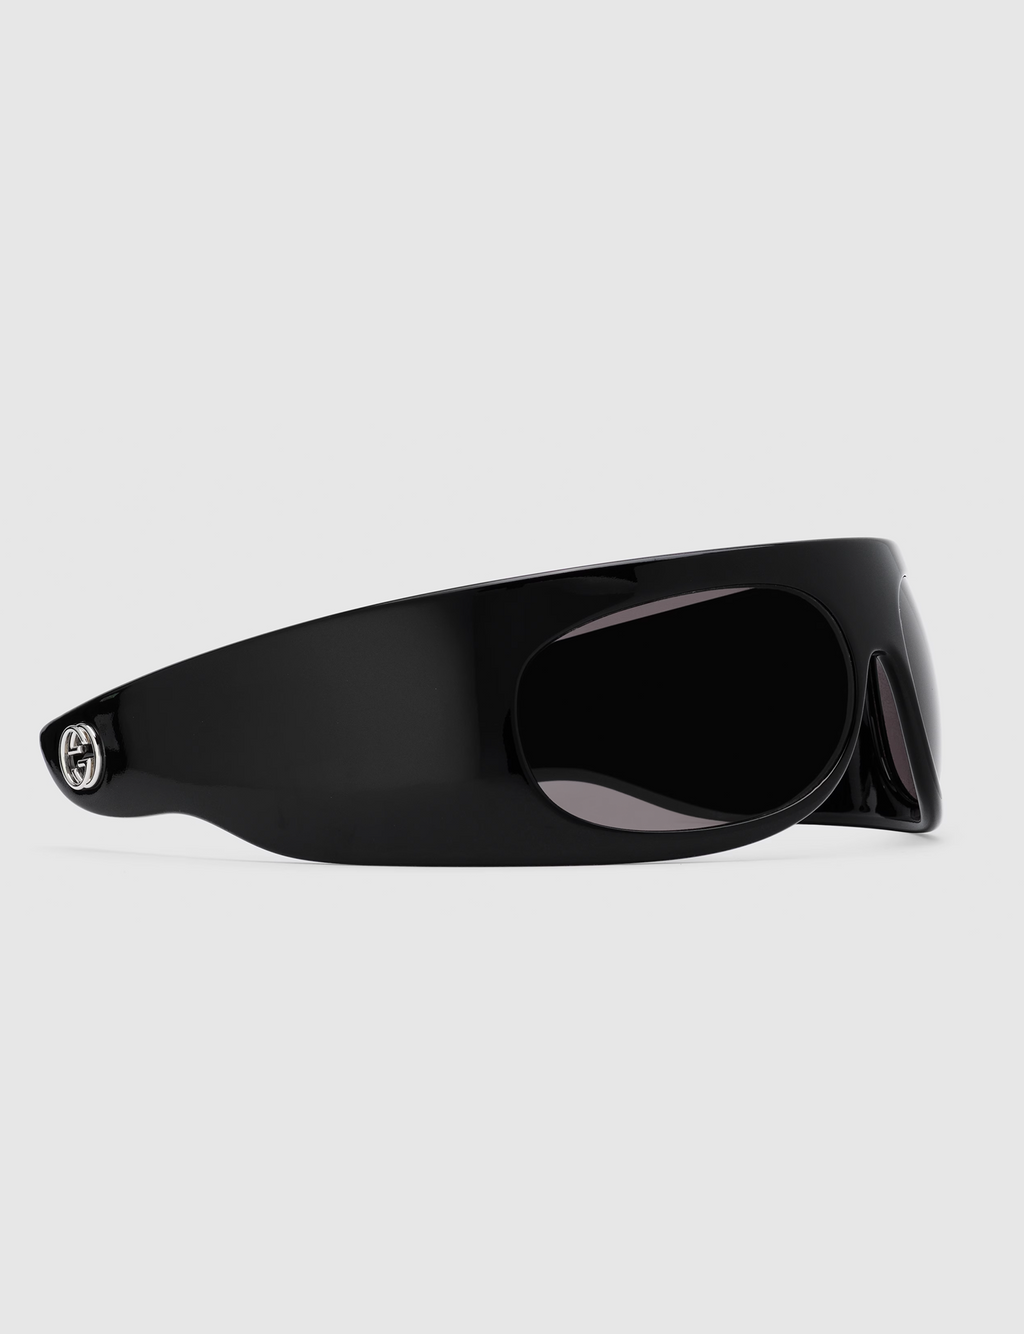 Wrap Sunglasses, Black/Grey